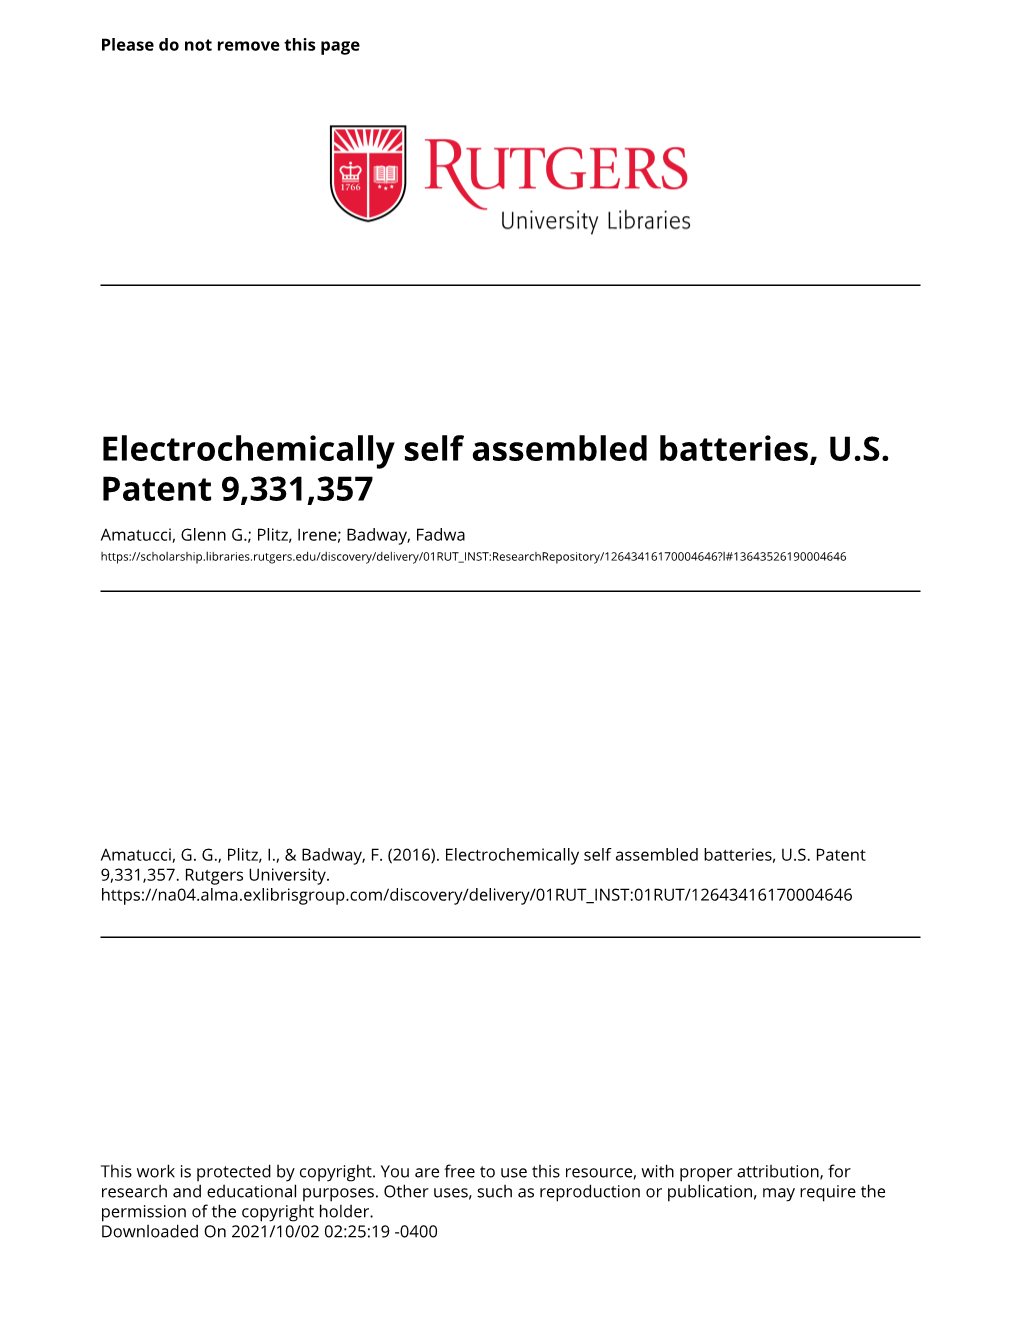 Electrochemically Self Assembled Batteries, U.S. Patent 9,331,357